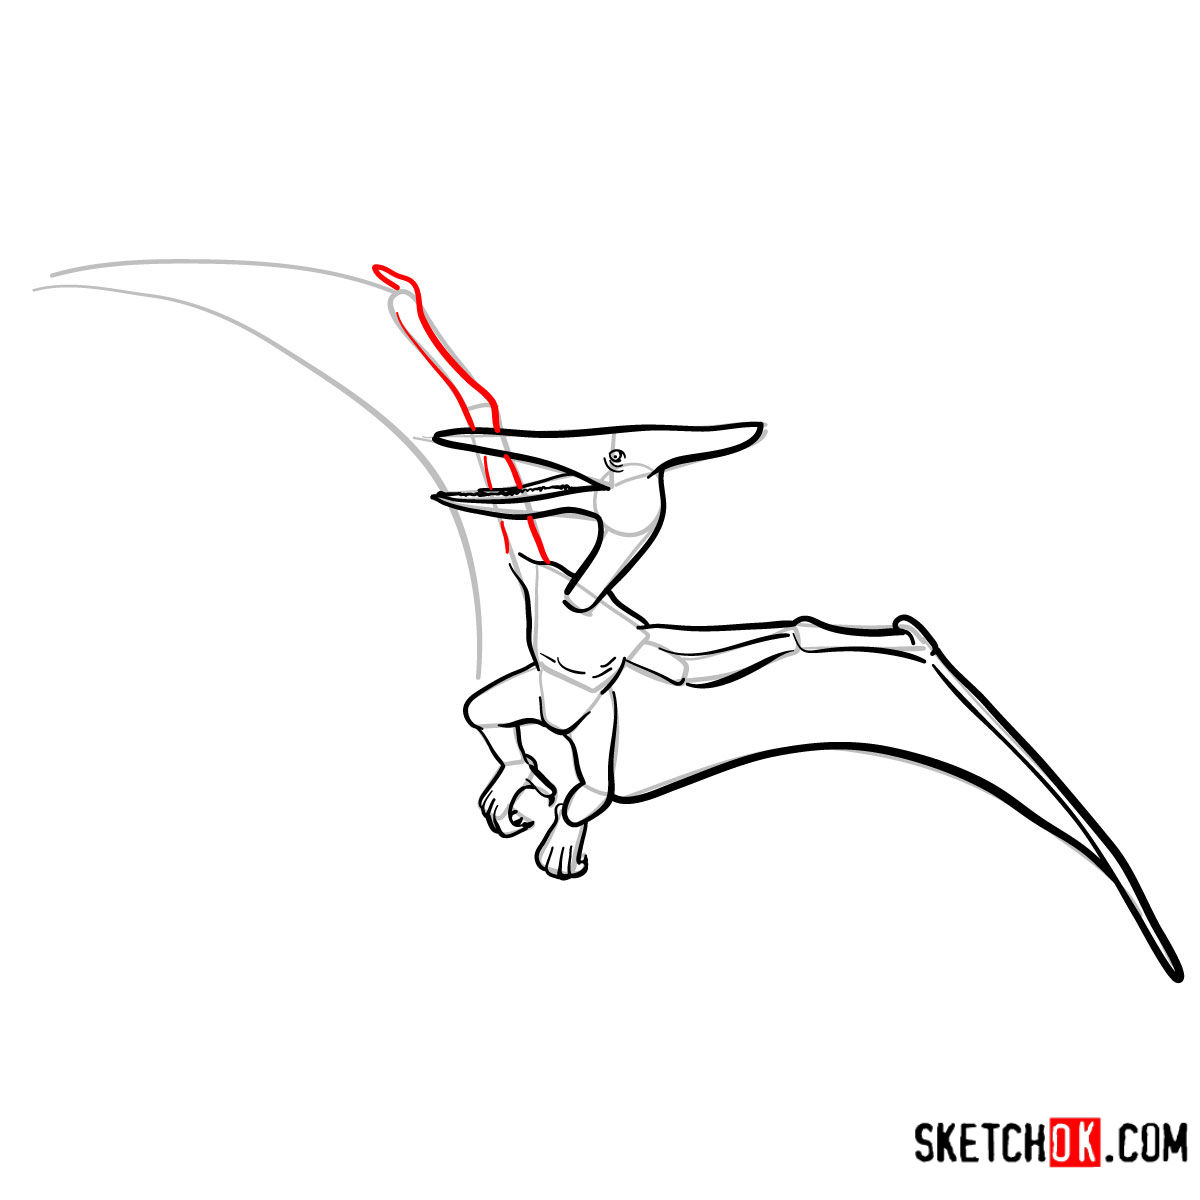 How to draw a Pterodactylus | Extinct Animals - step 10